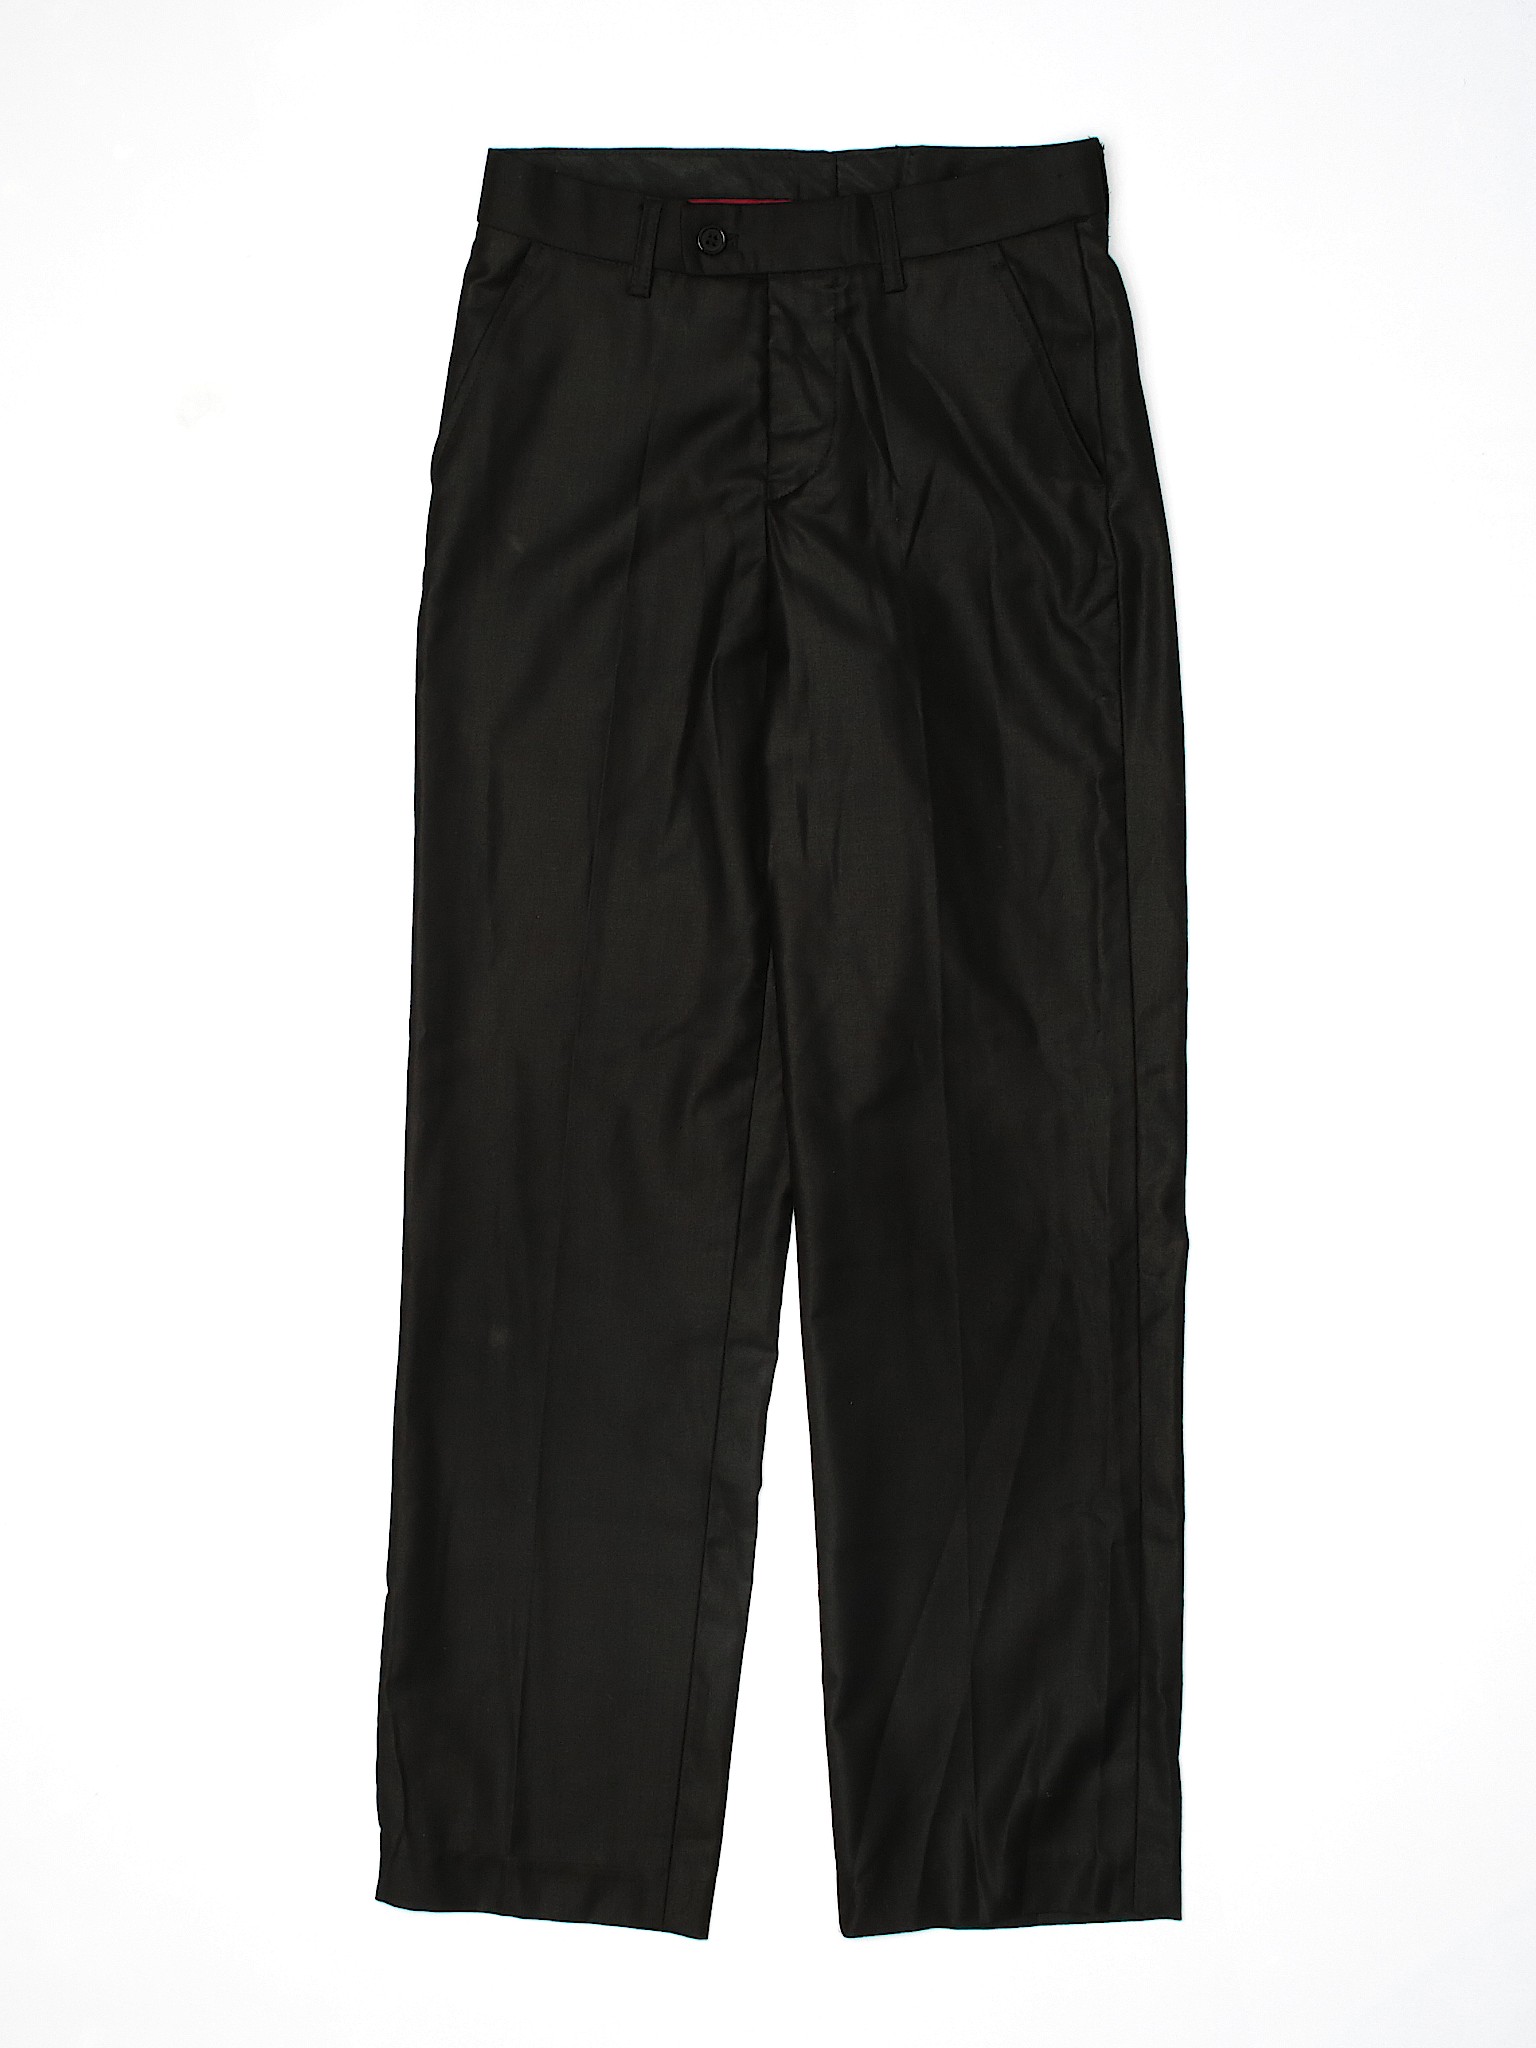 Juniors Boys Black Dress Pants 10 | eBay